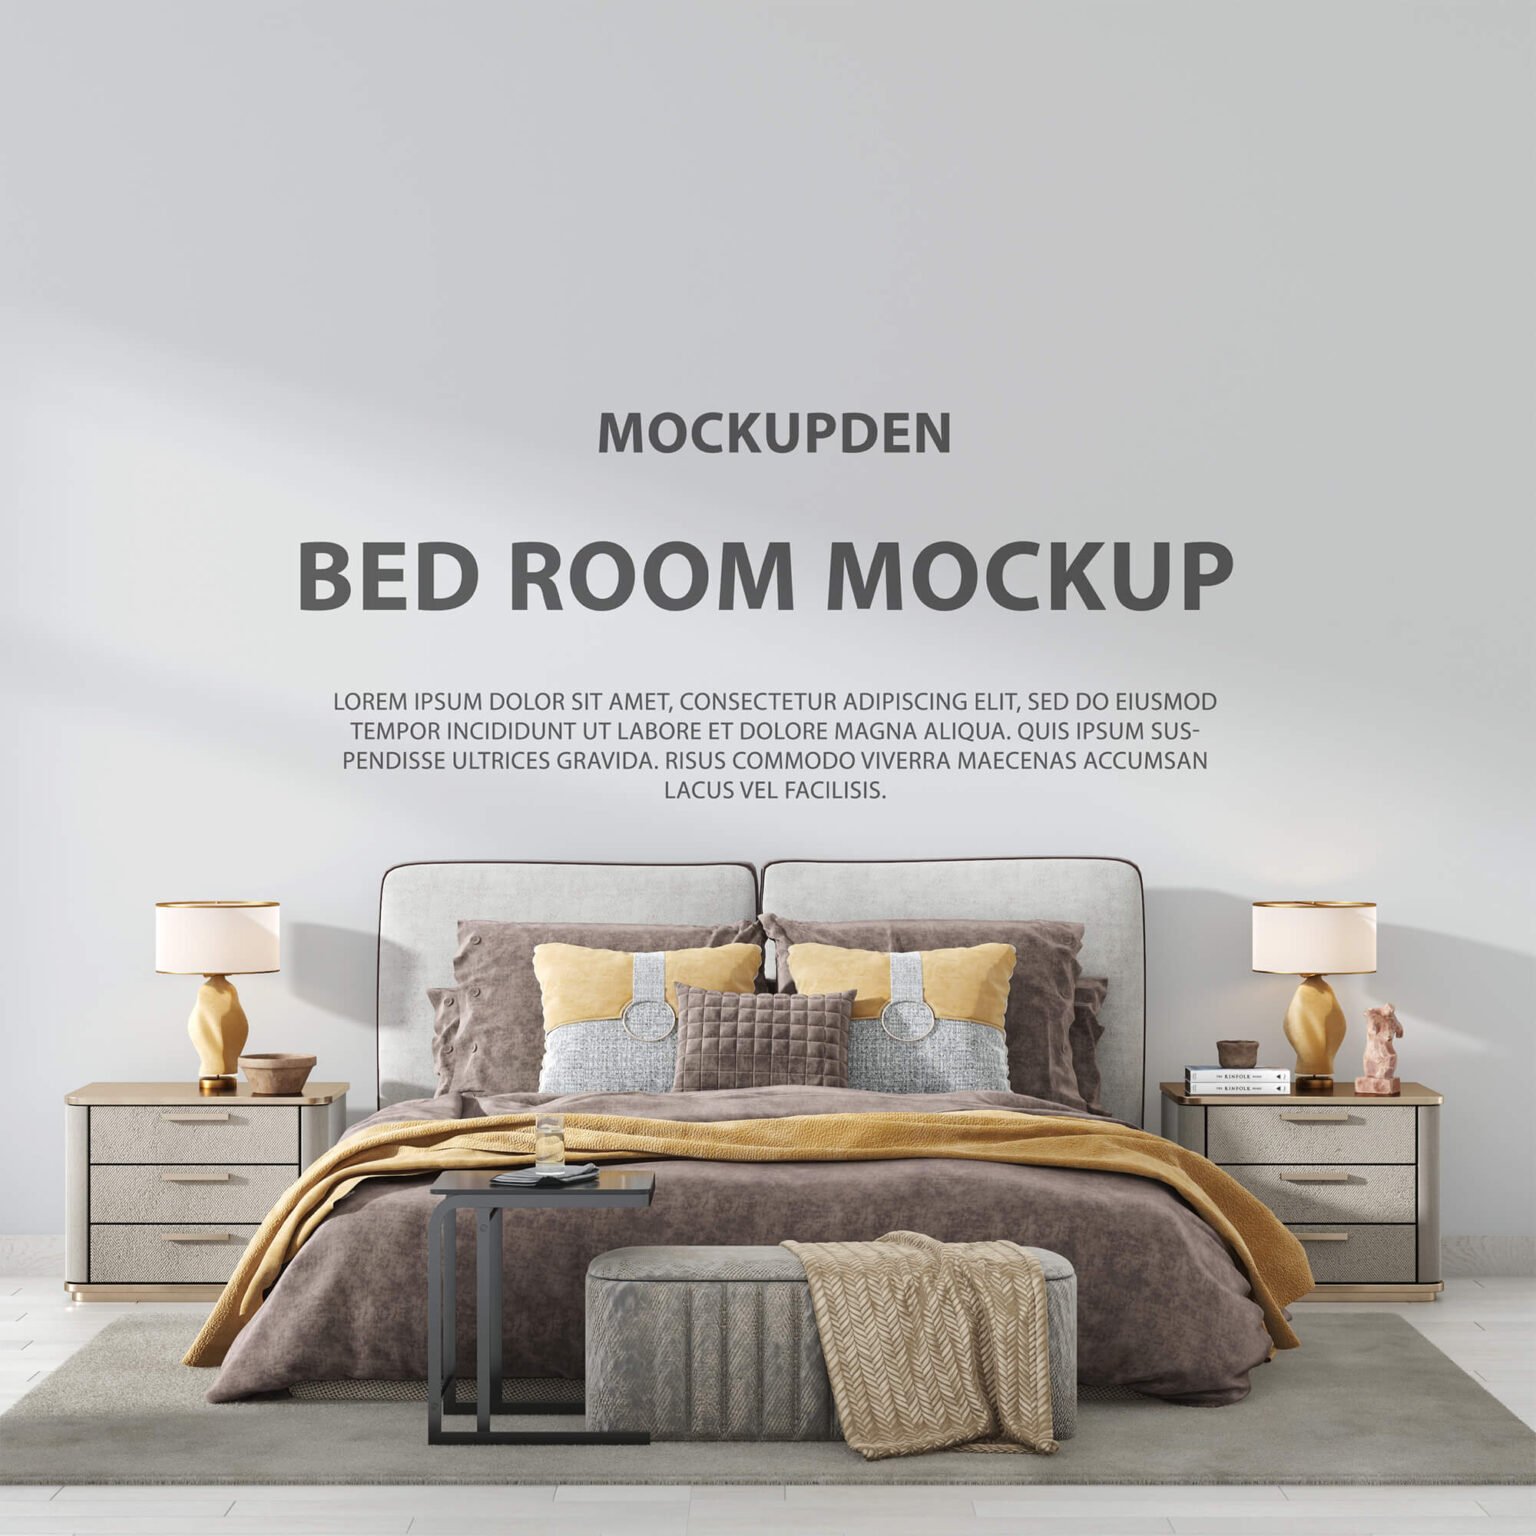 Free Bed Room Mockup Psd Template Mockup Den 8241